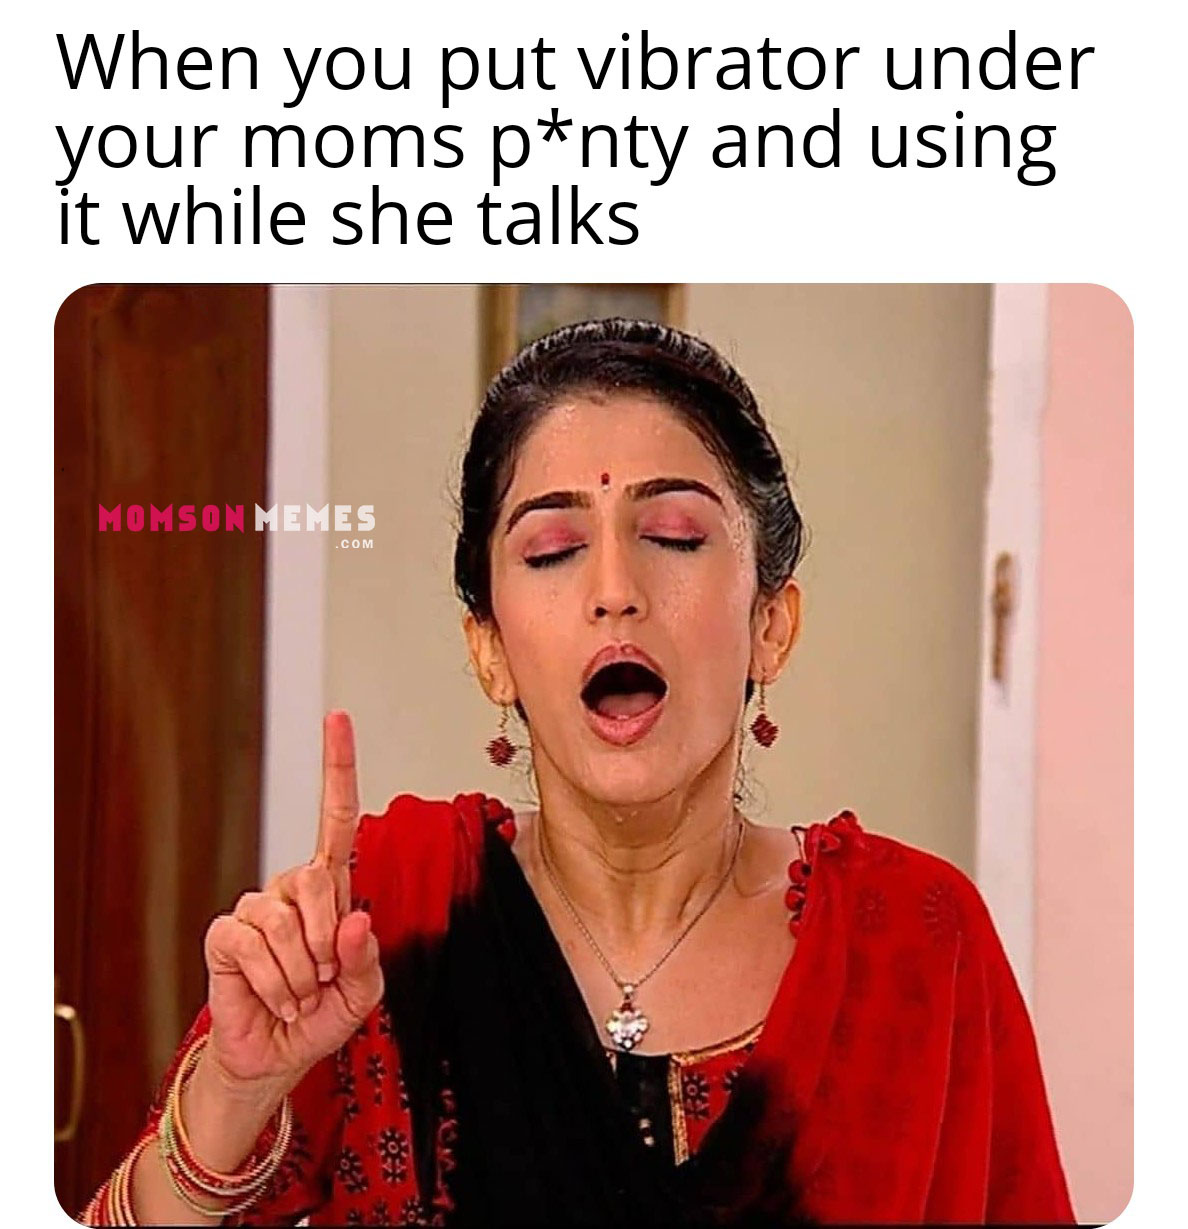 vibrator on mom’s panty!